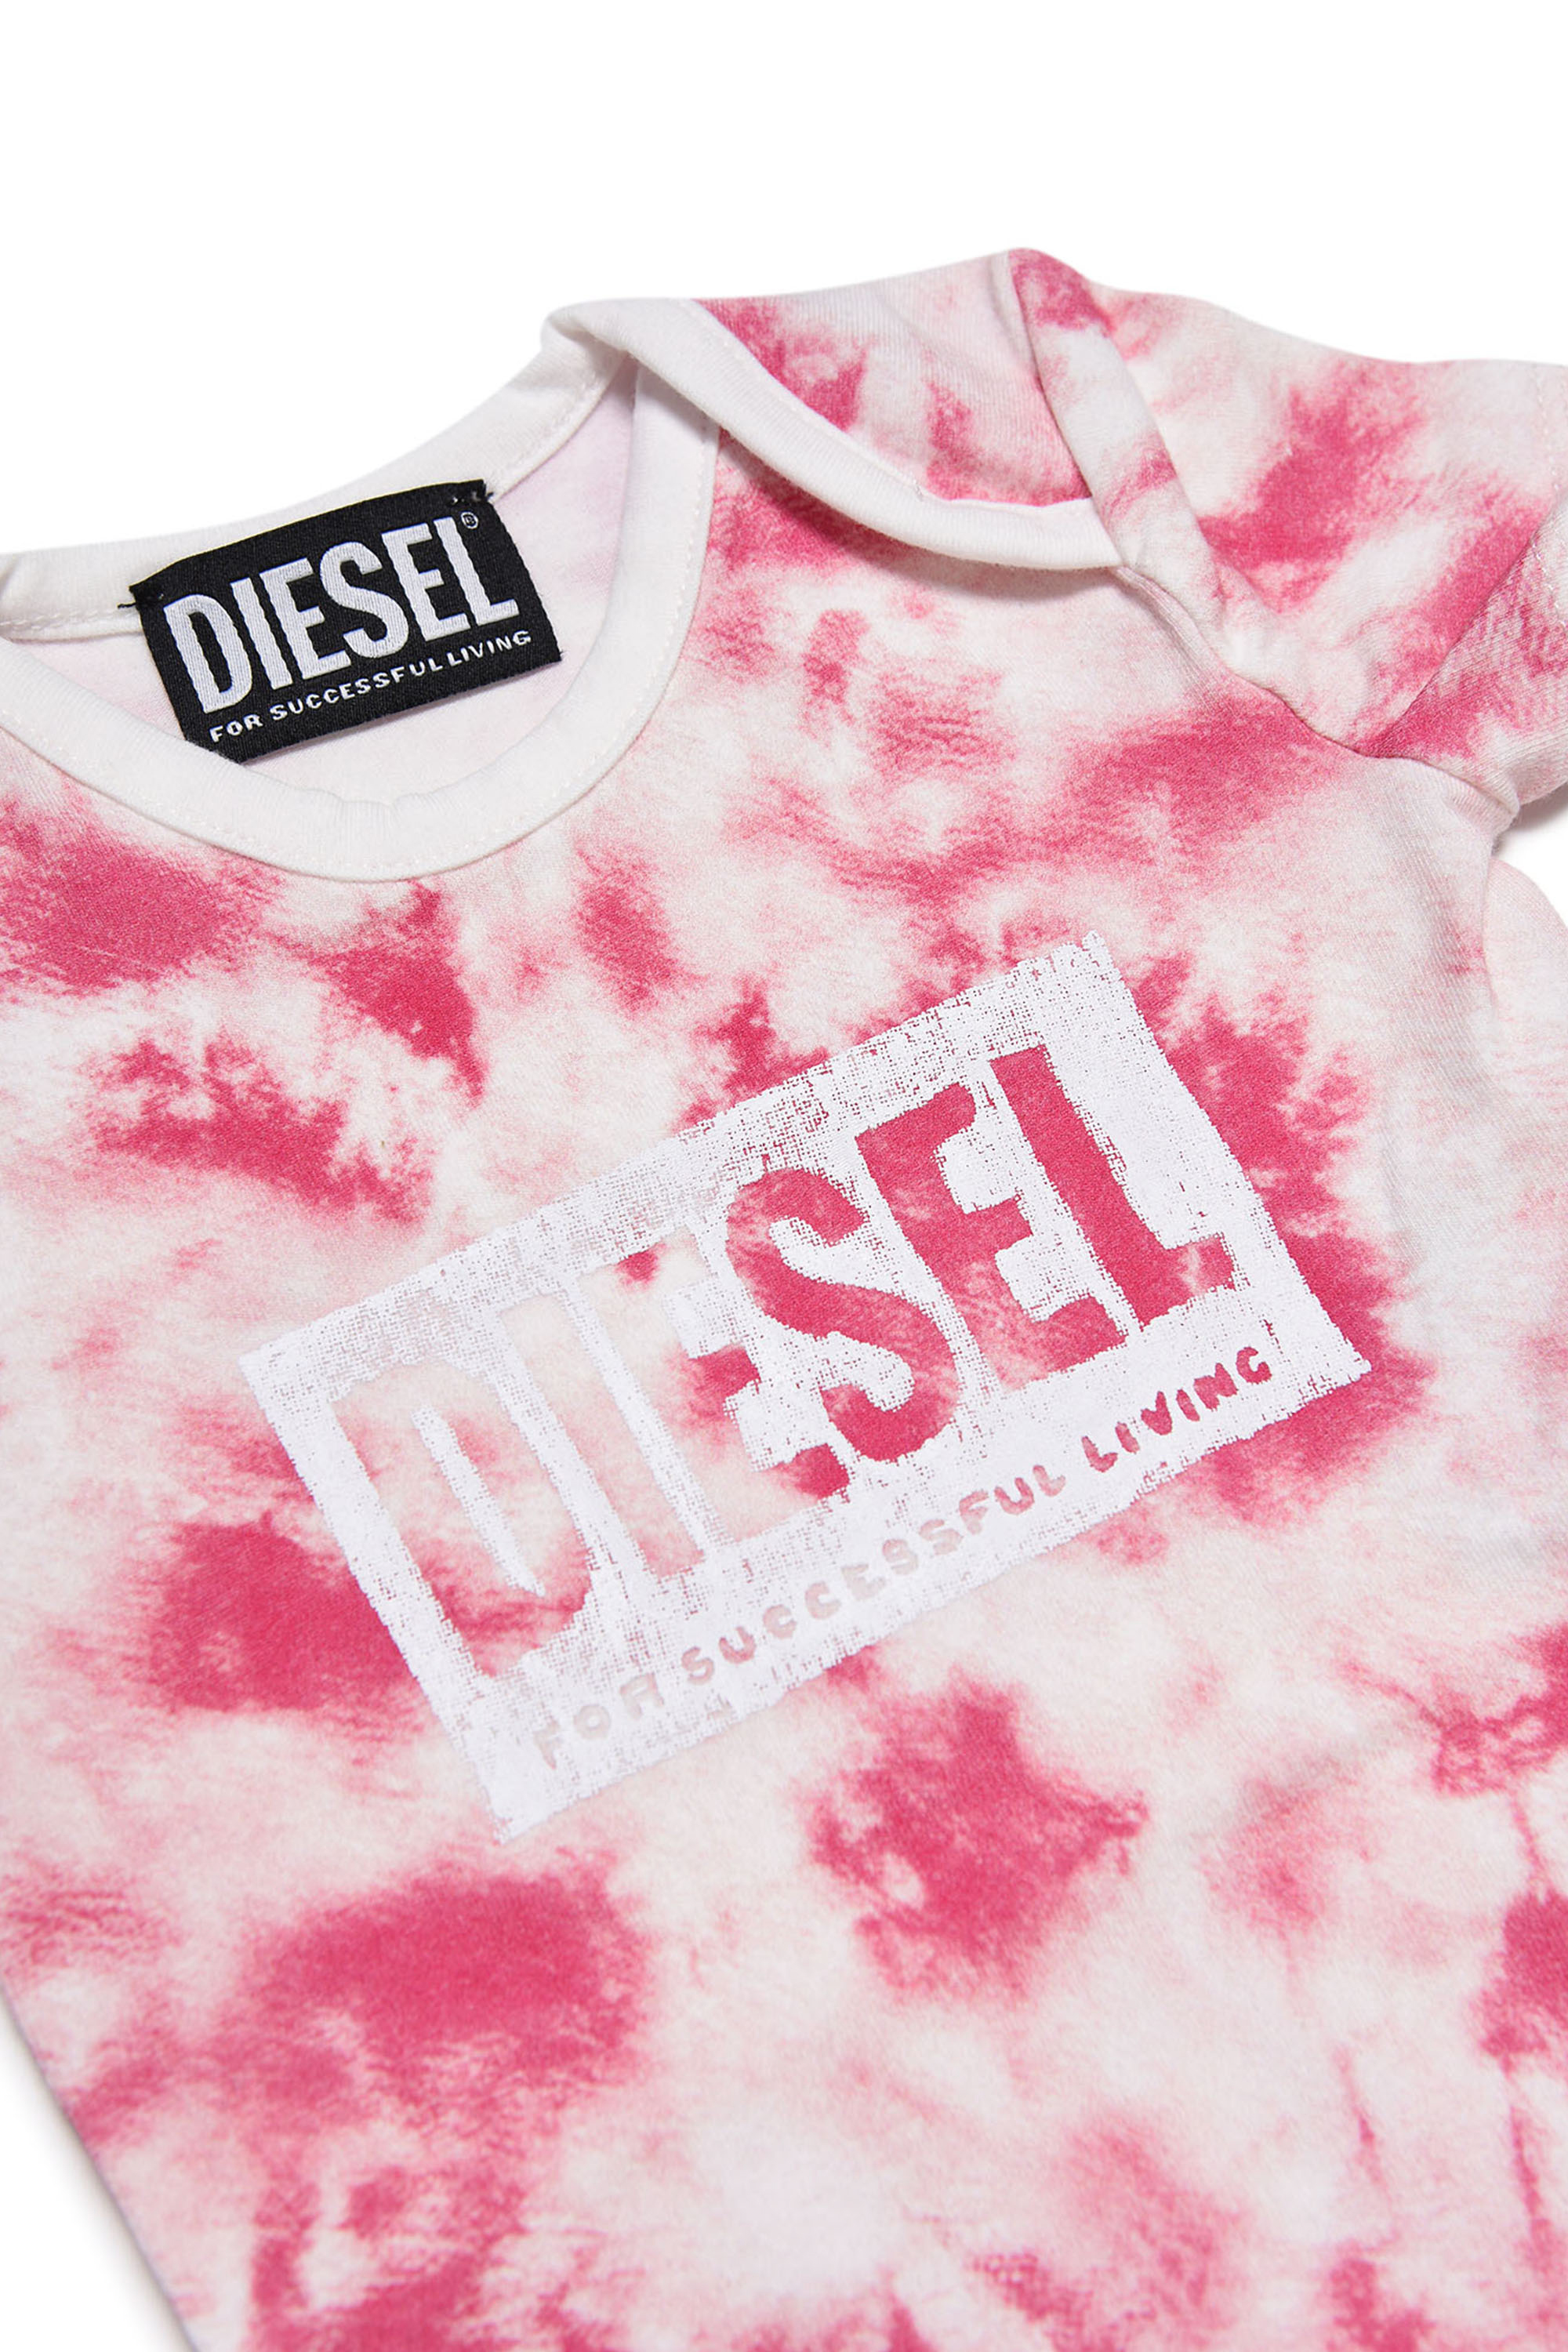 Diesel - UGY-NB, Bianco/Rosa - Image 3